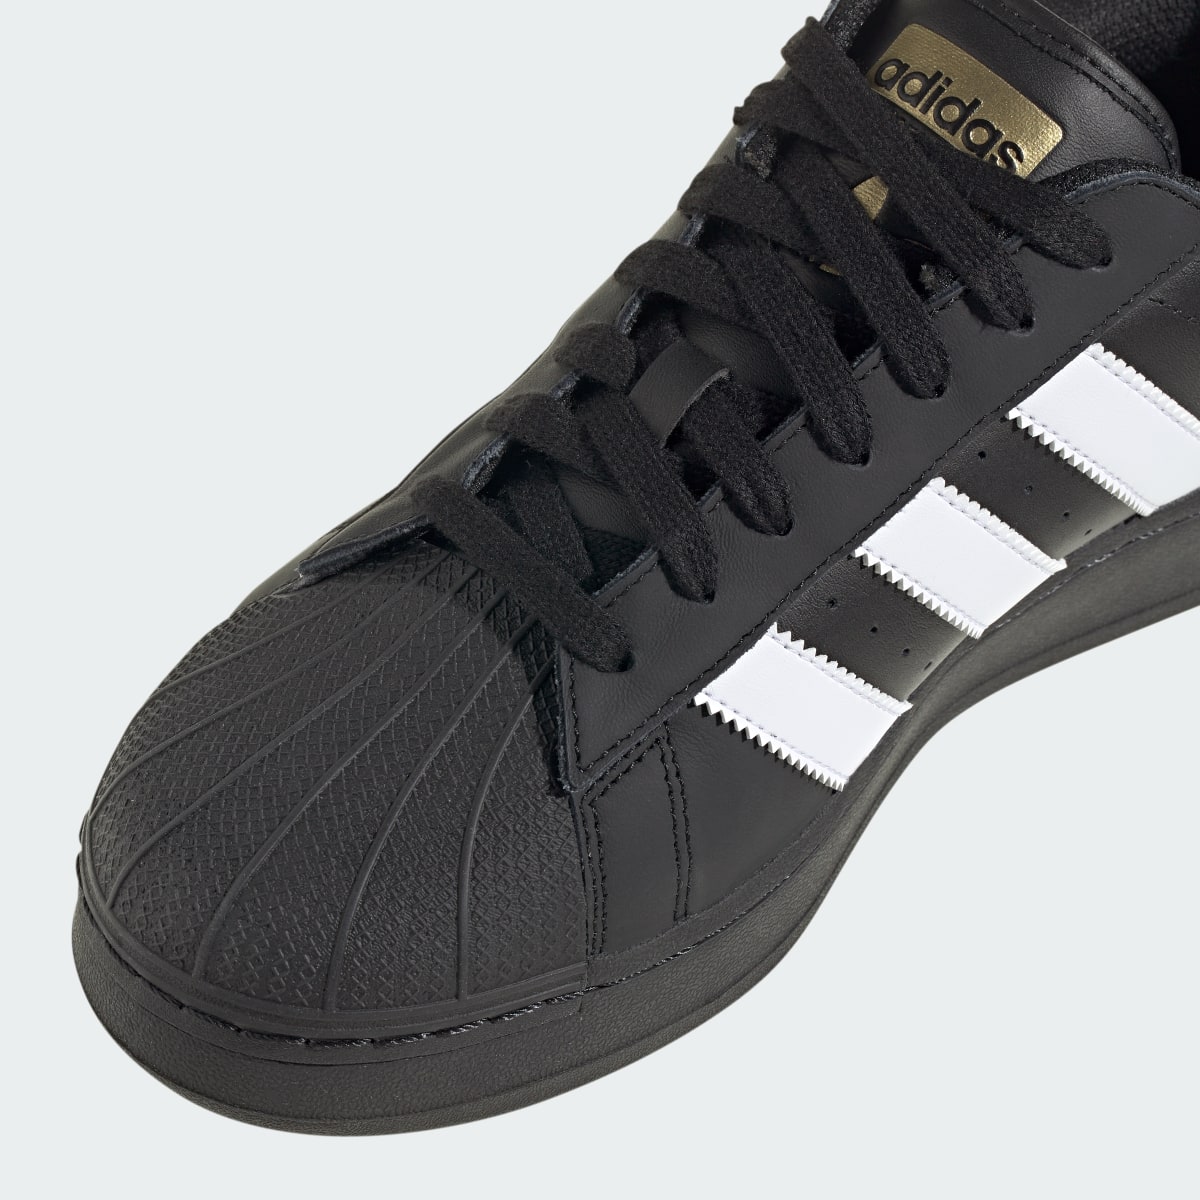 Adidas Scarpe Superstar XLG. 10